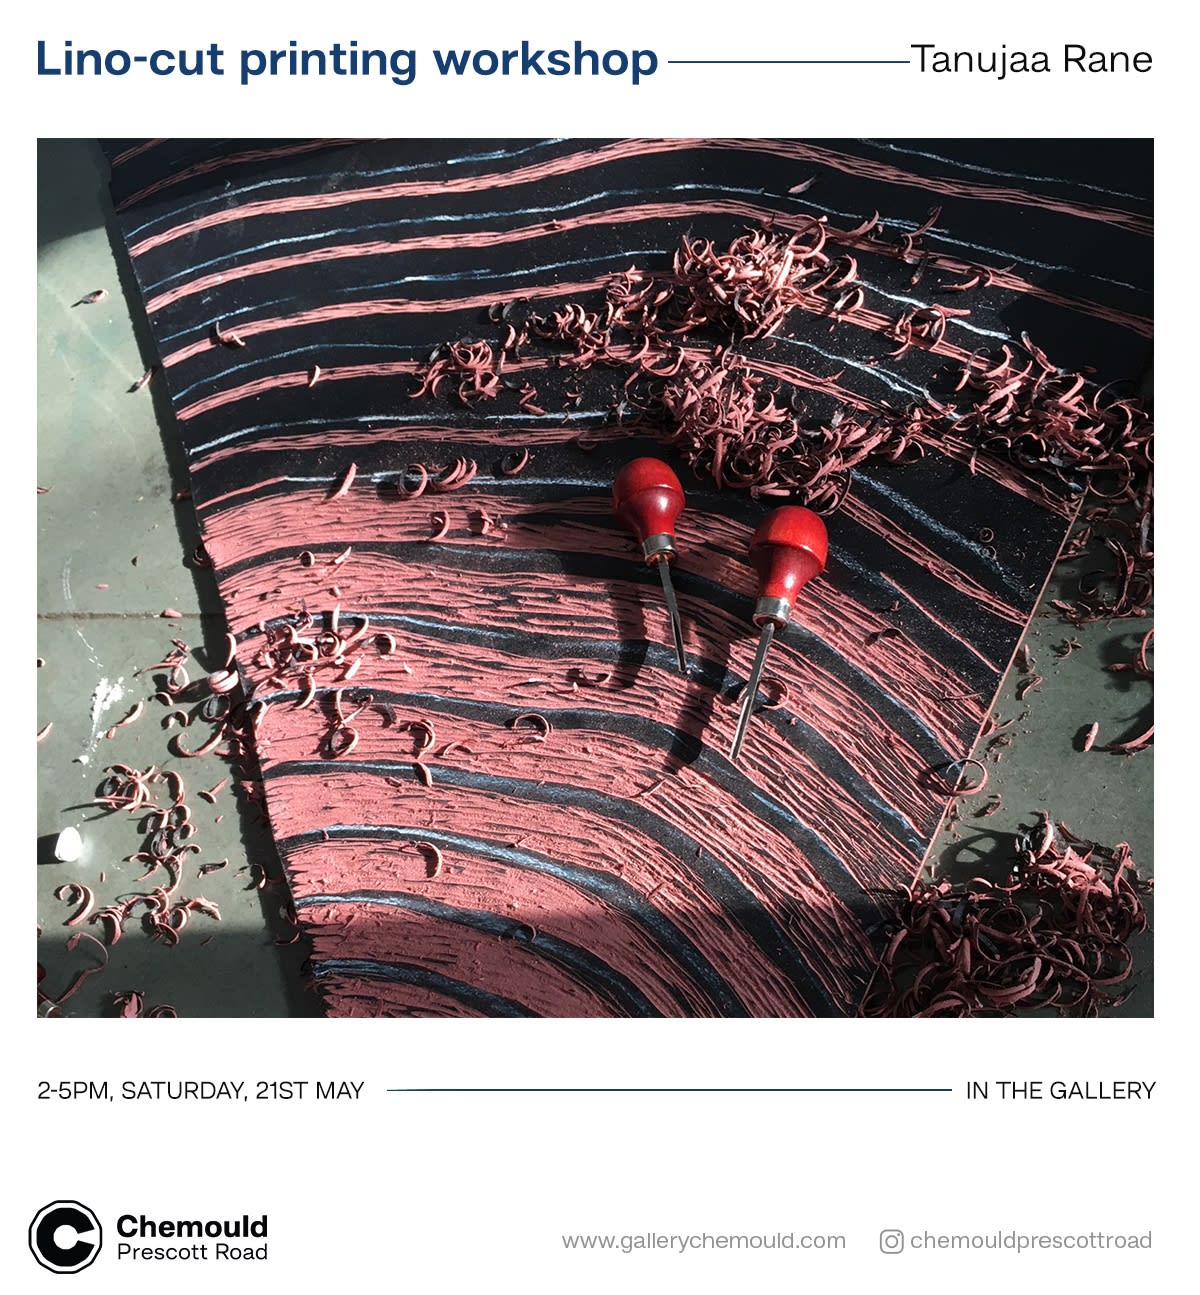 Lino-cut printing workshop